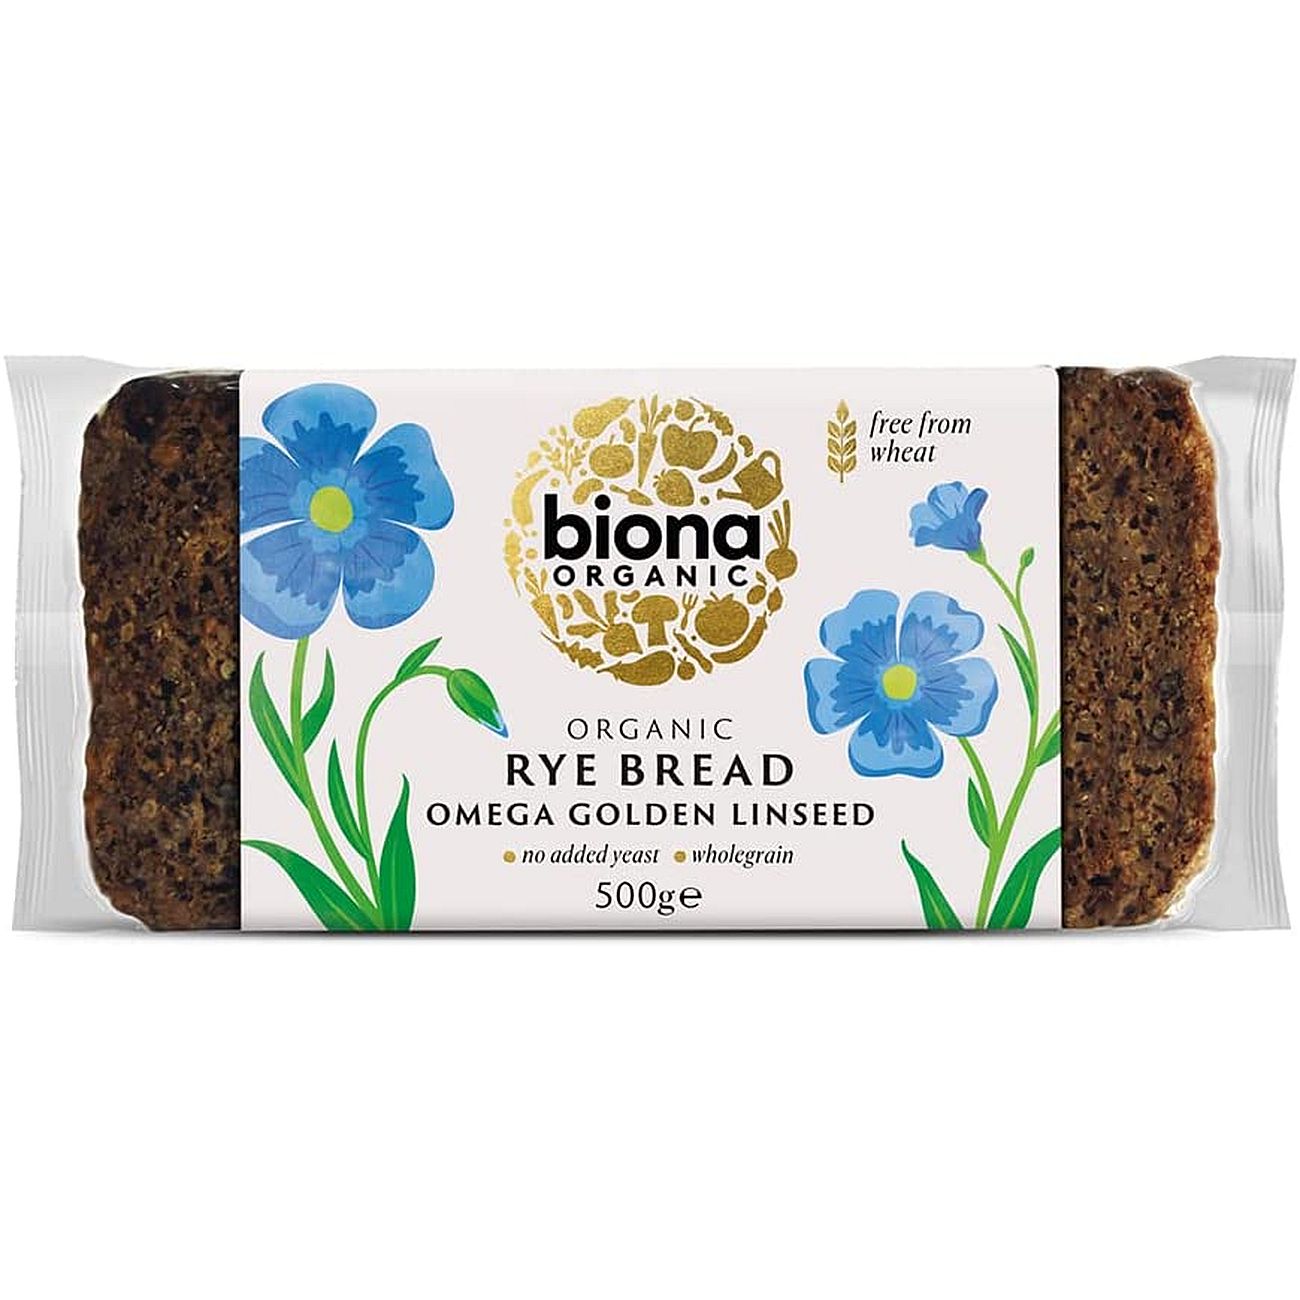 Organic Omega Golden Linseed Rye Bread 500g